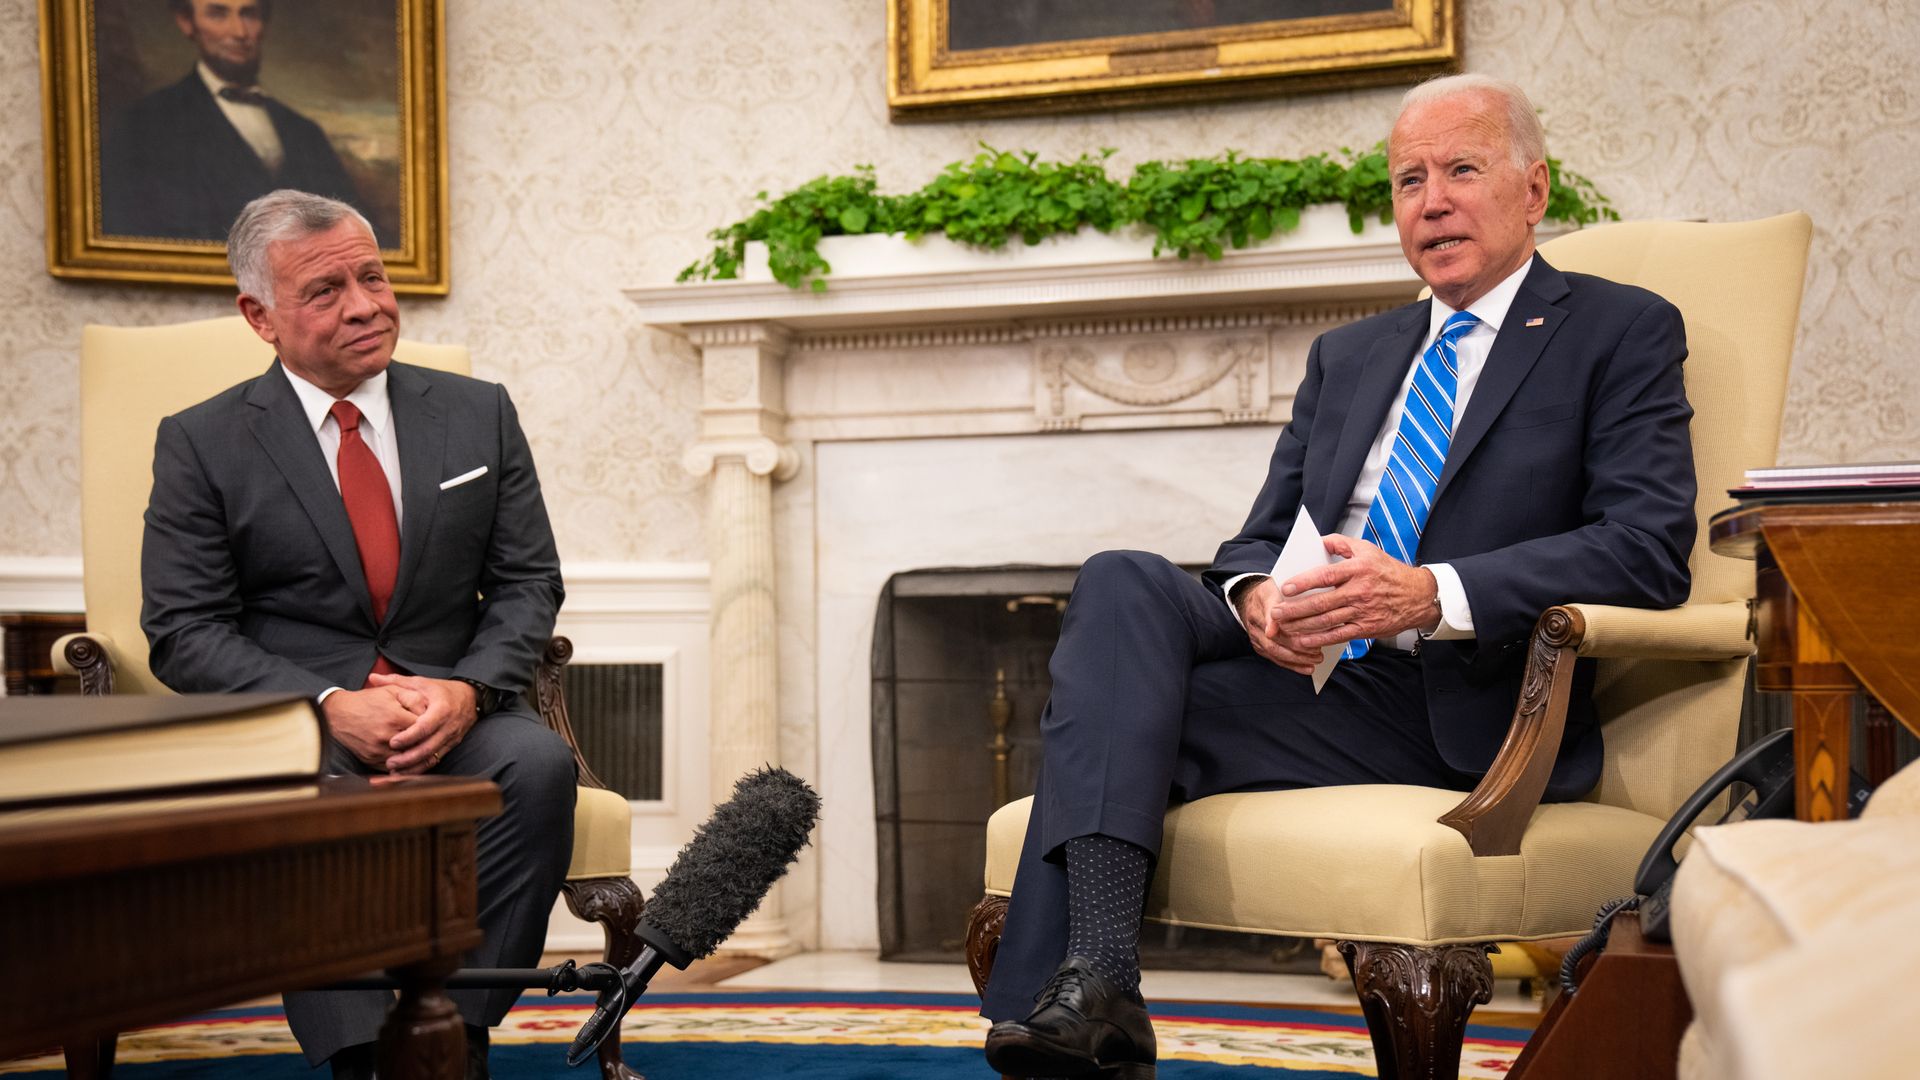 U.S. President Joe Biden and King Abdullah II of Jordan meet in the Oval Office of the White House in Washington, D.C., U.S., on Monday, July 19, 2021.